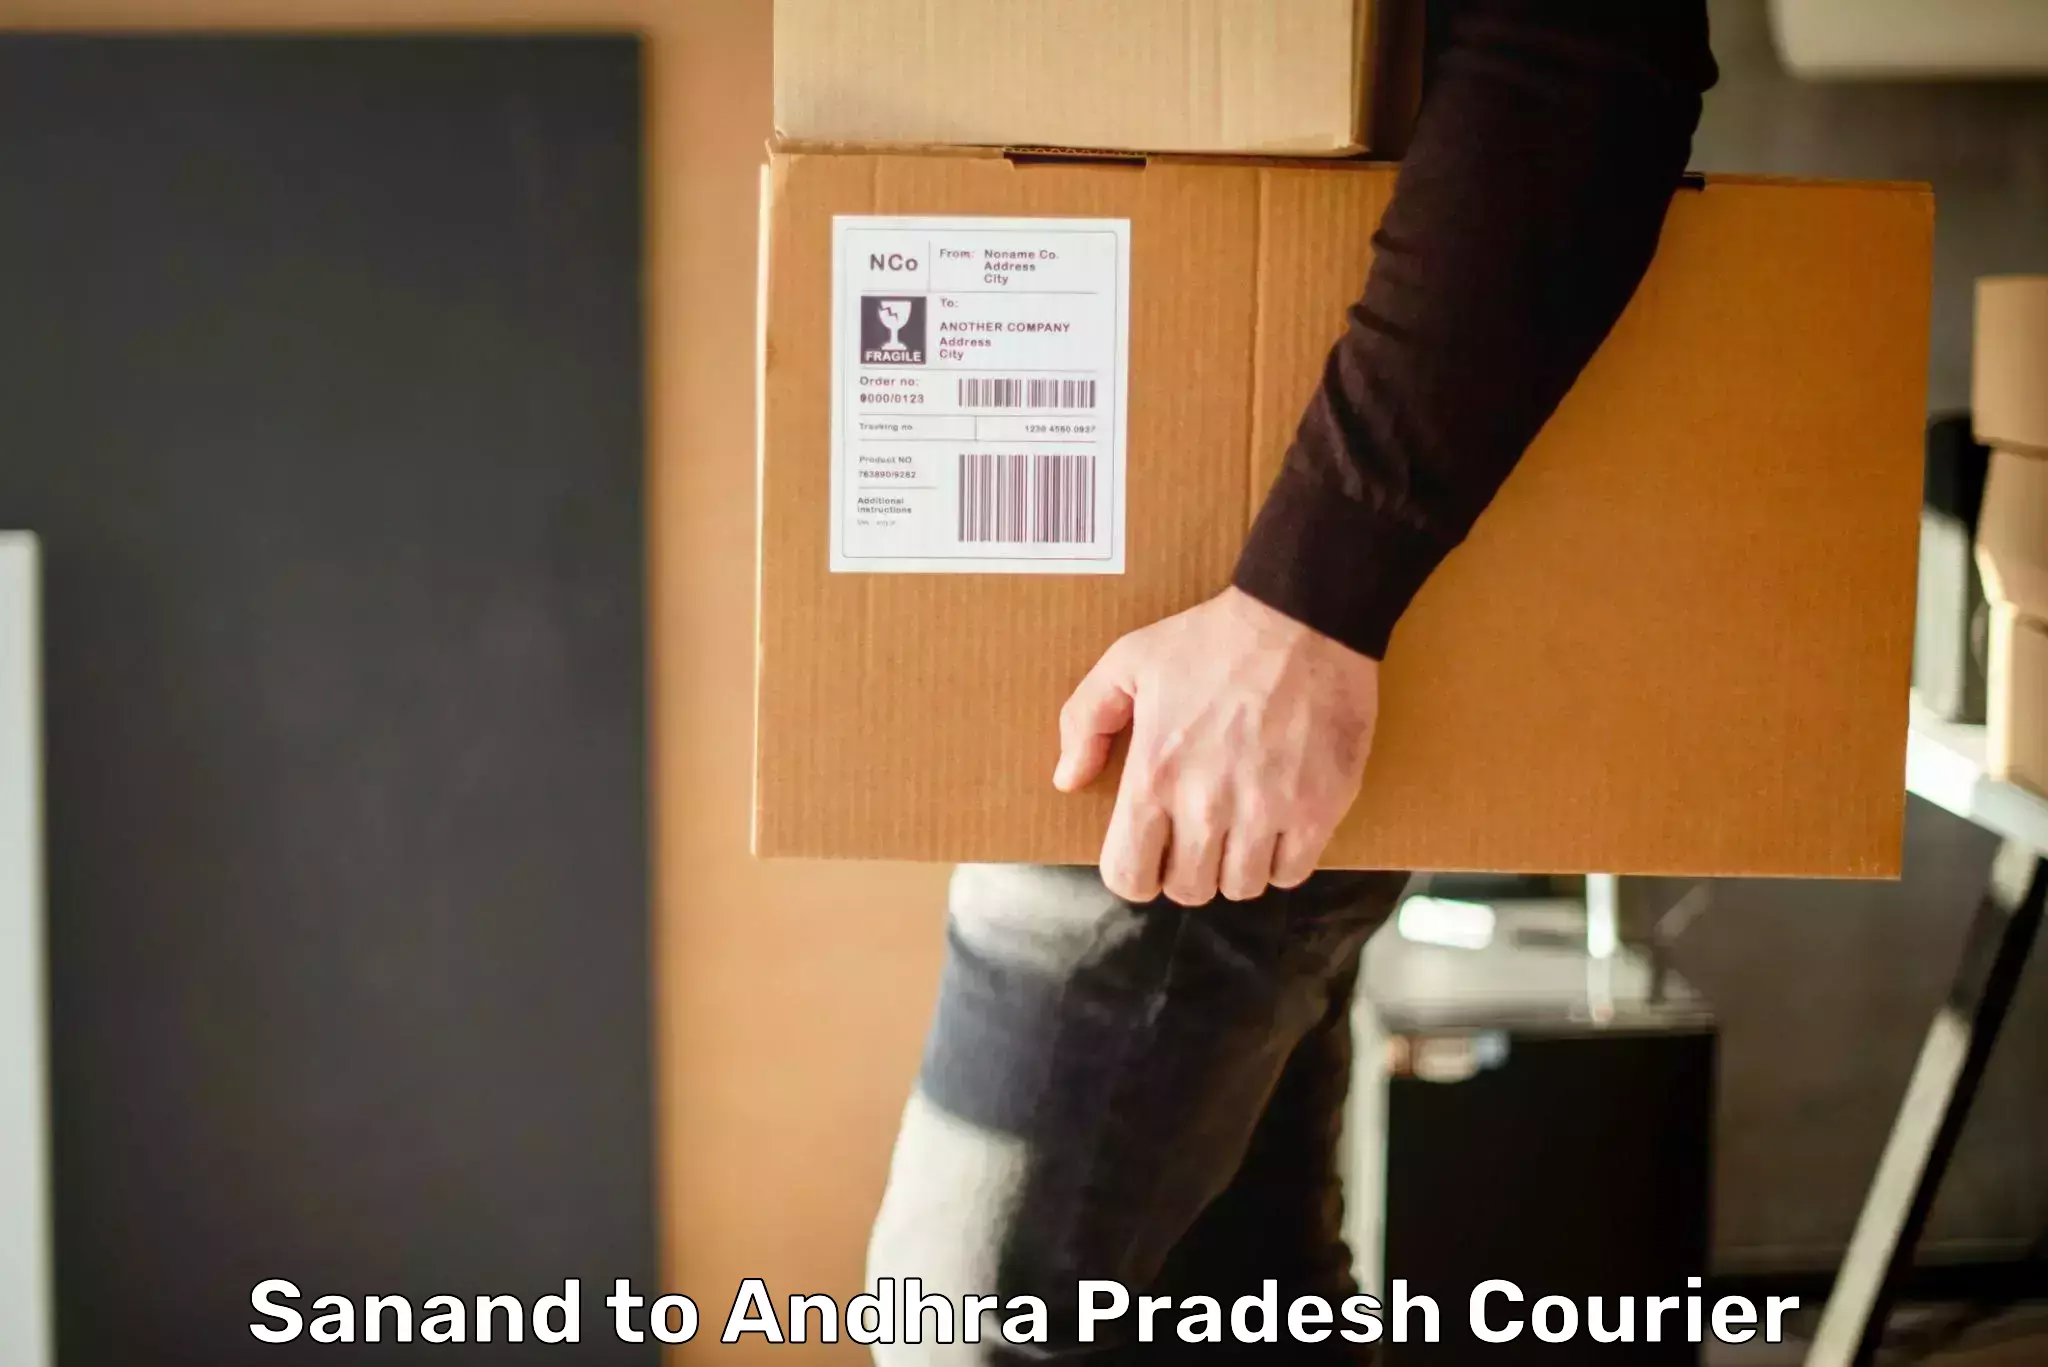 Professional courier handling Sanand to Vijayawada